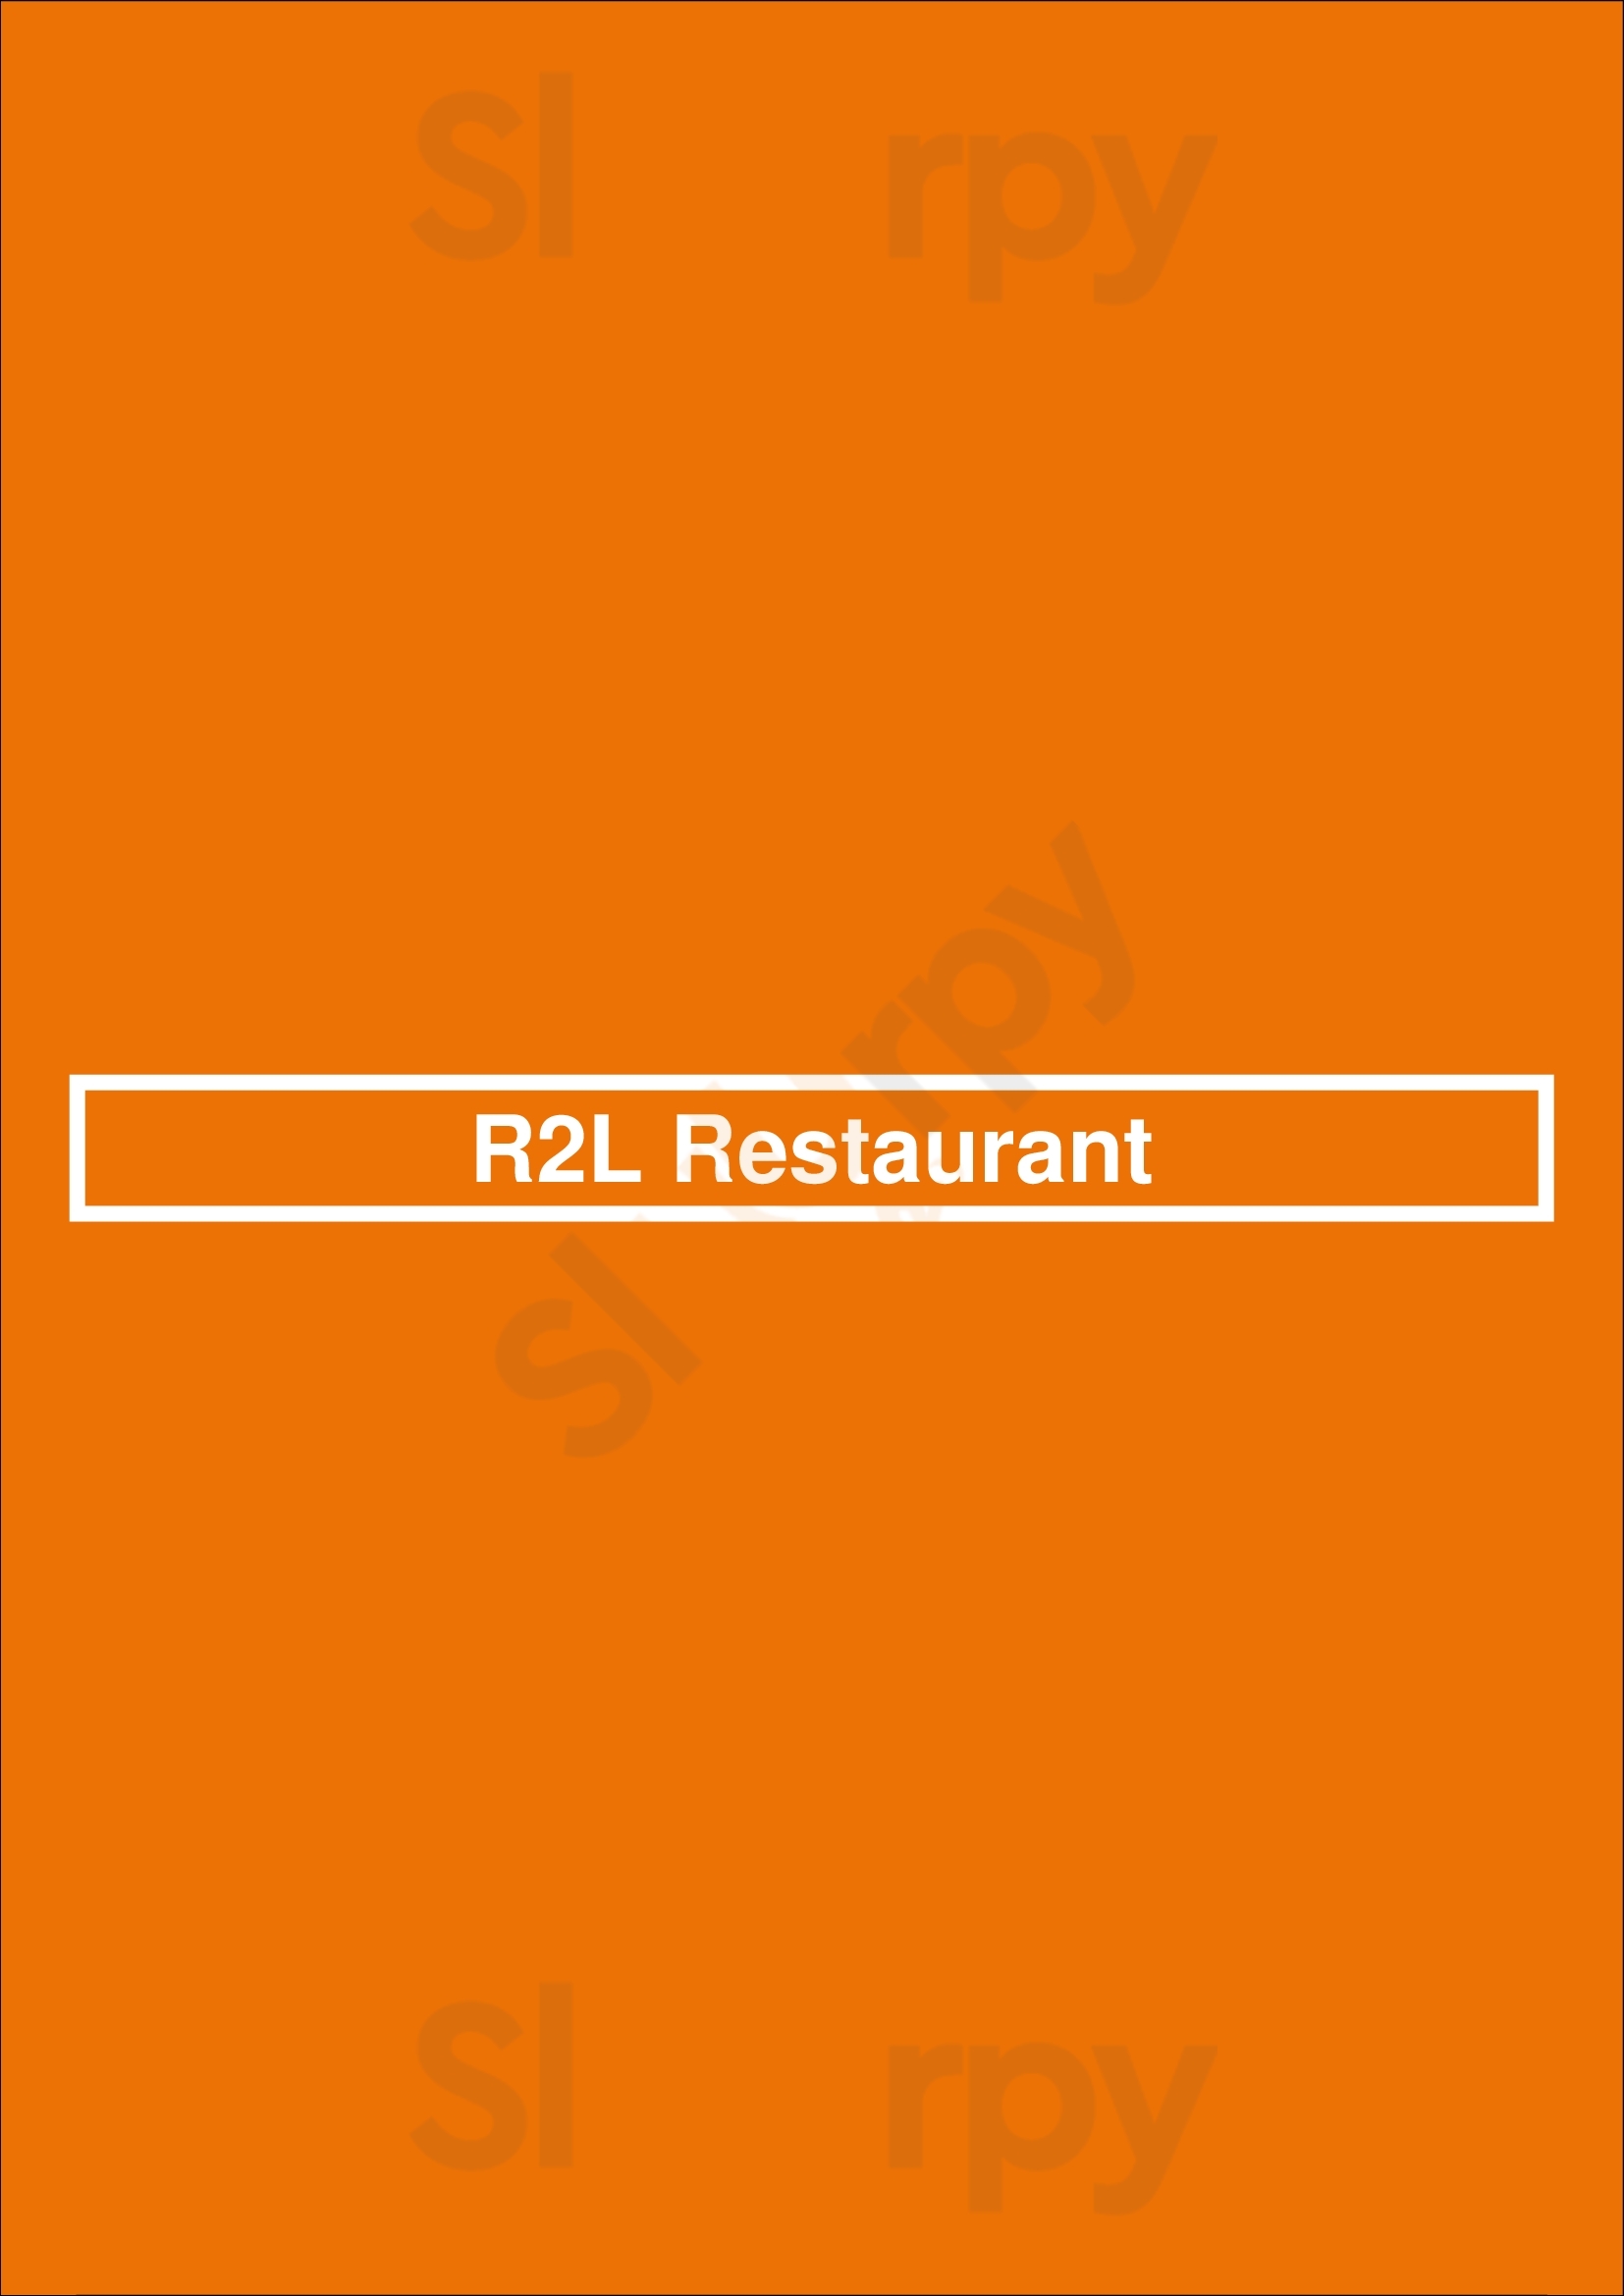 R2l Restaurant Philadelphia Menu - 1